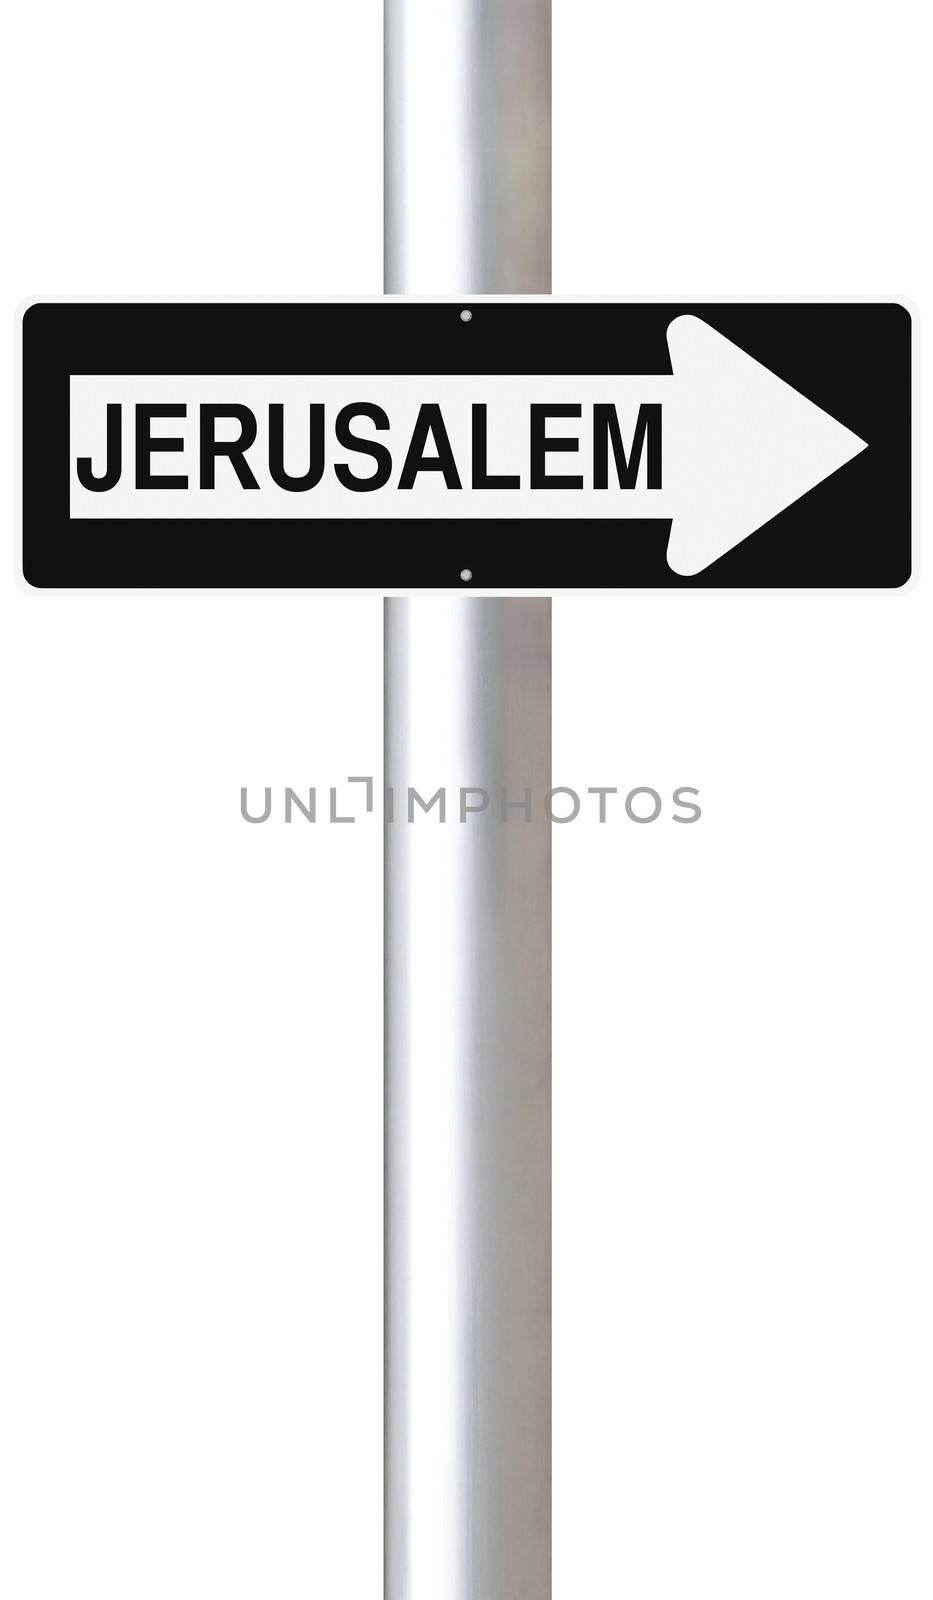 A modified one way sign indicating Jerusalem